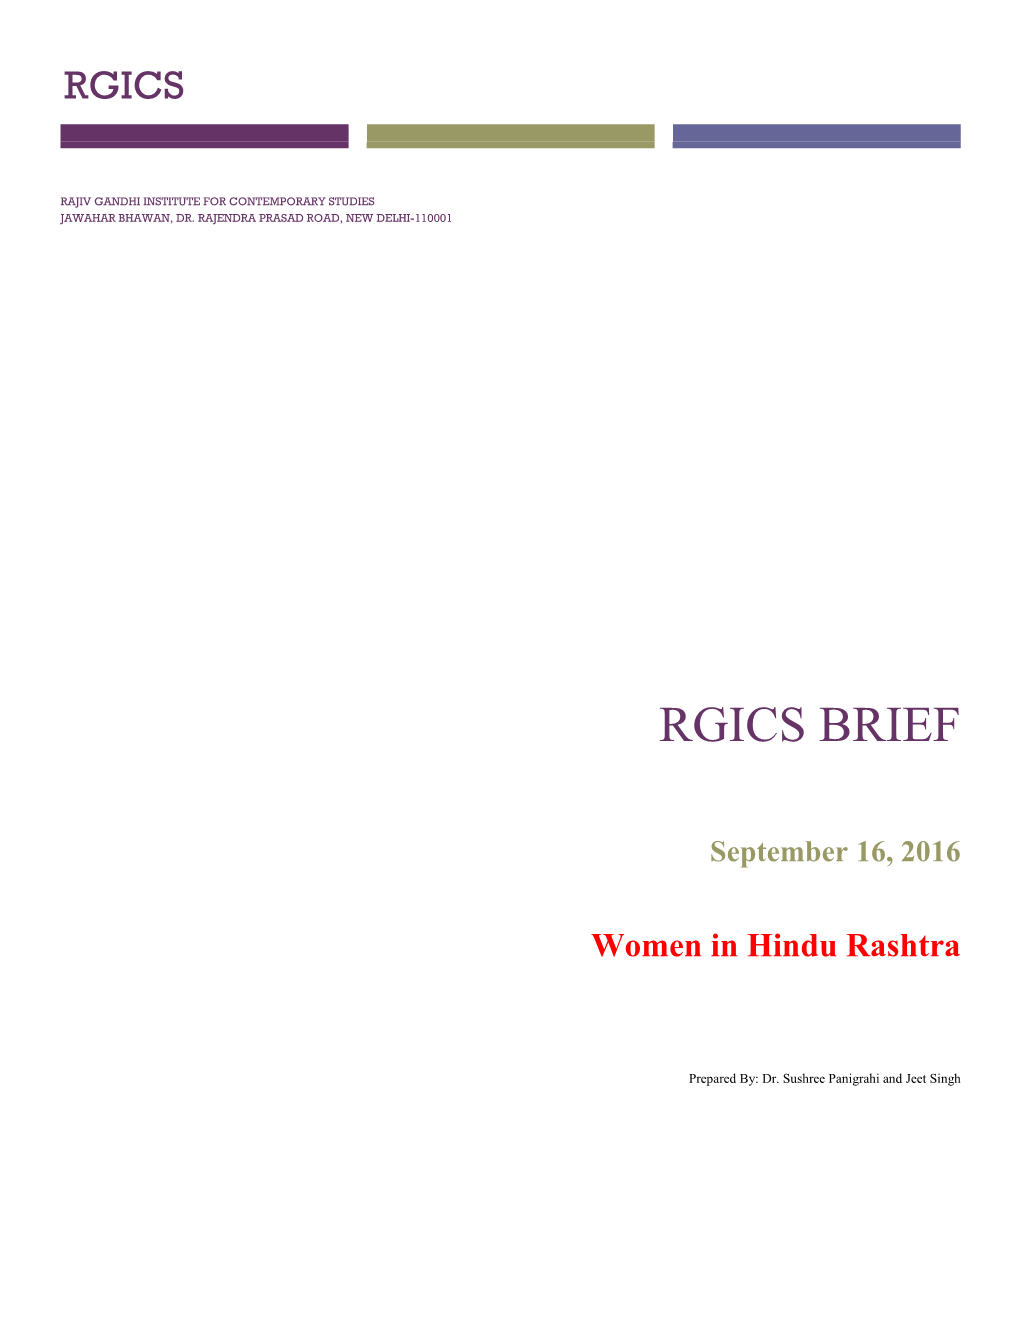 RGICS Brief Women in Hindu Rashtra